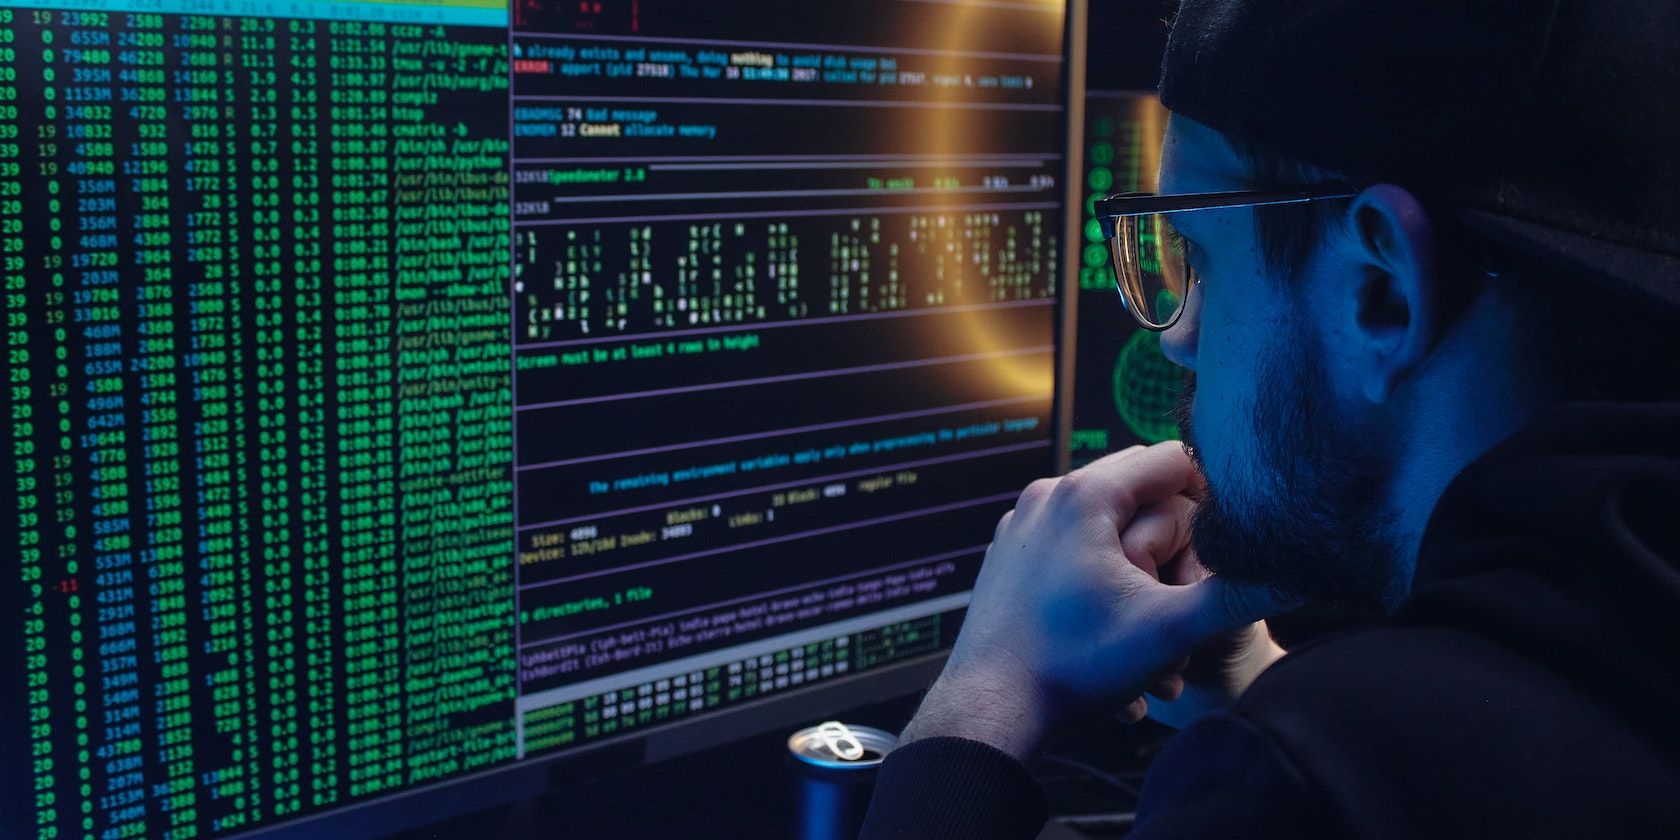 A hacker who monitors botnet devices